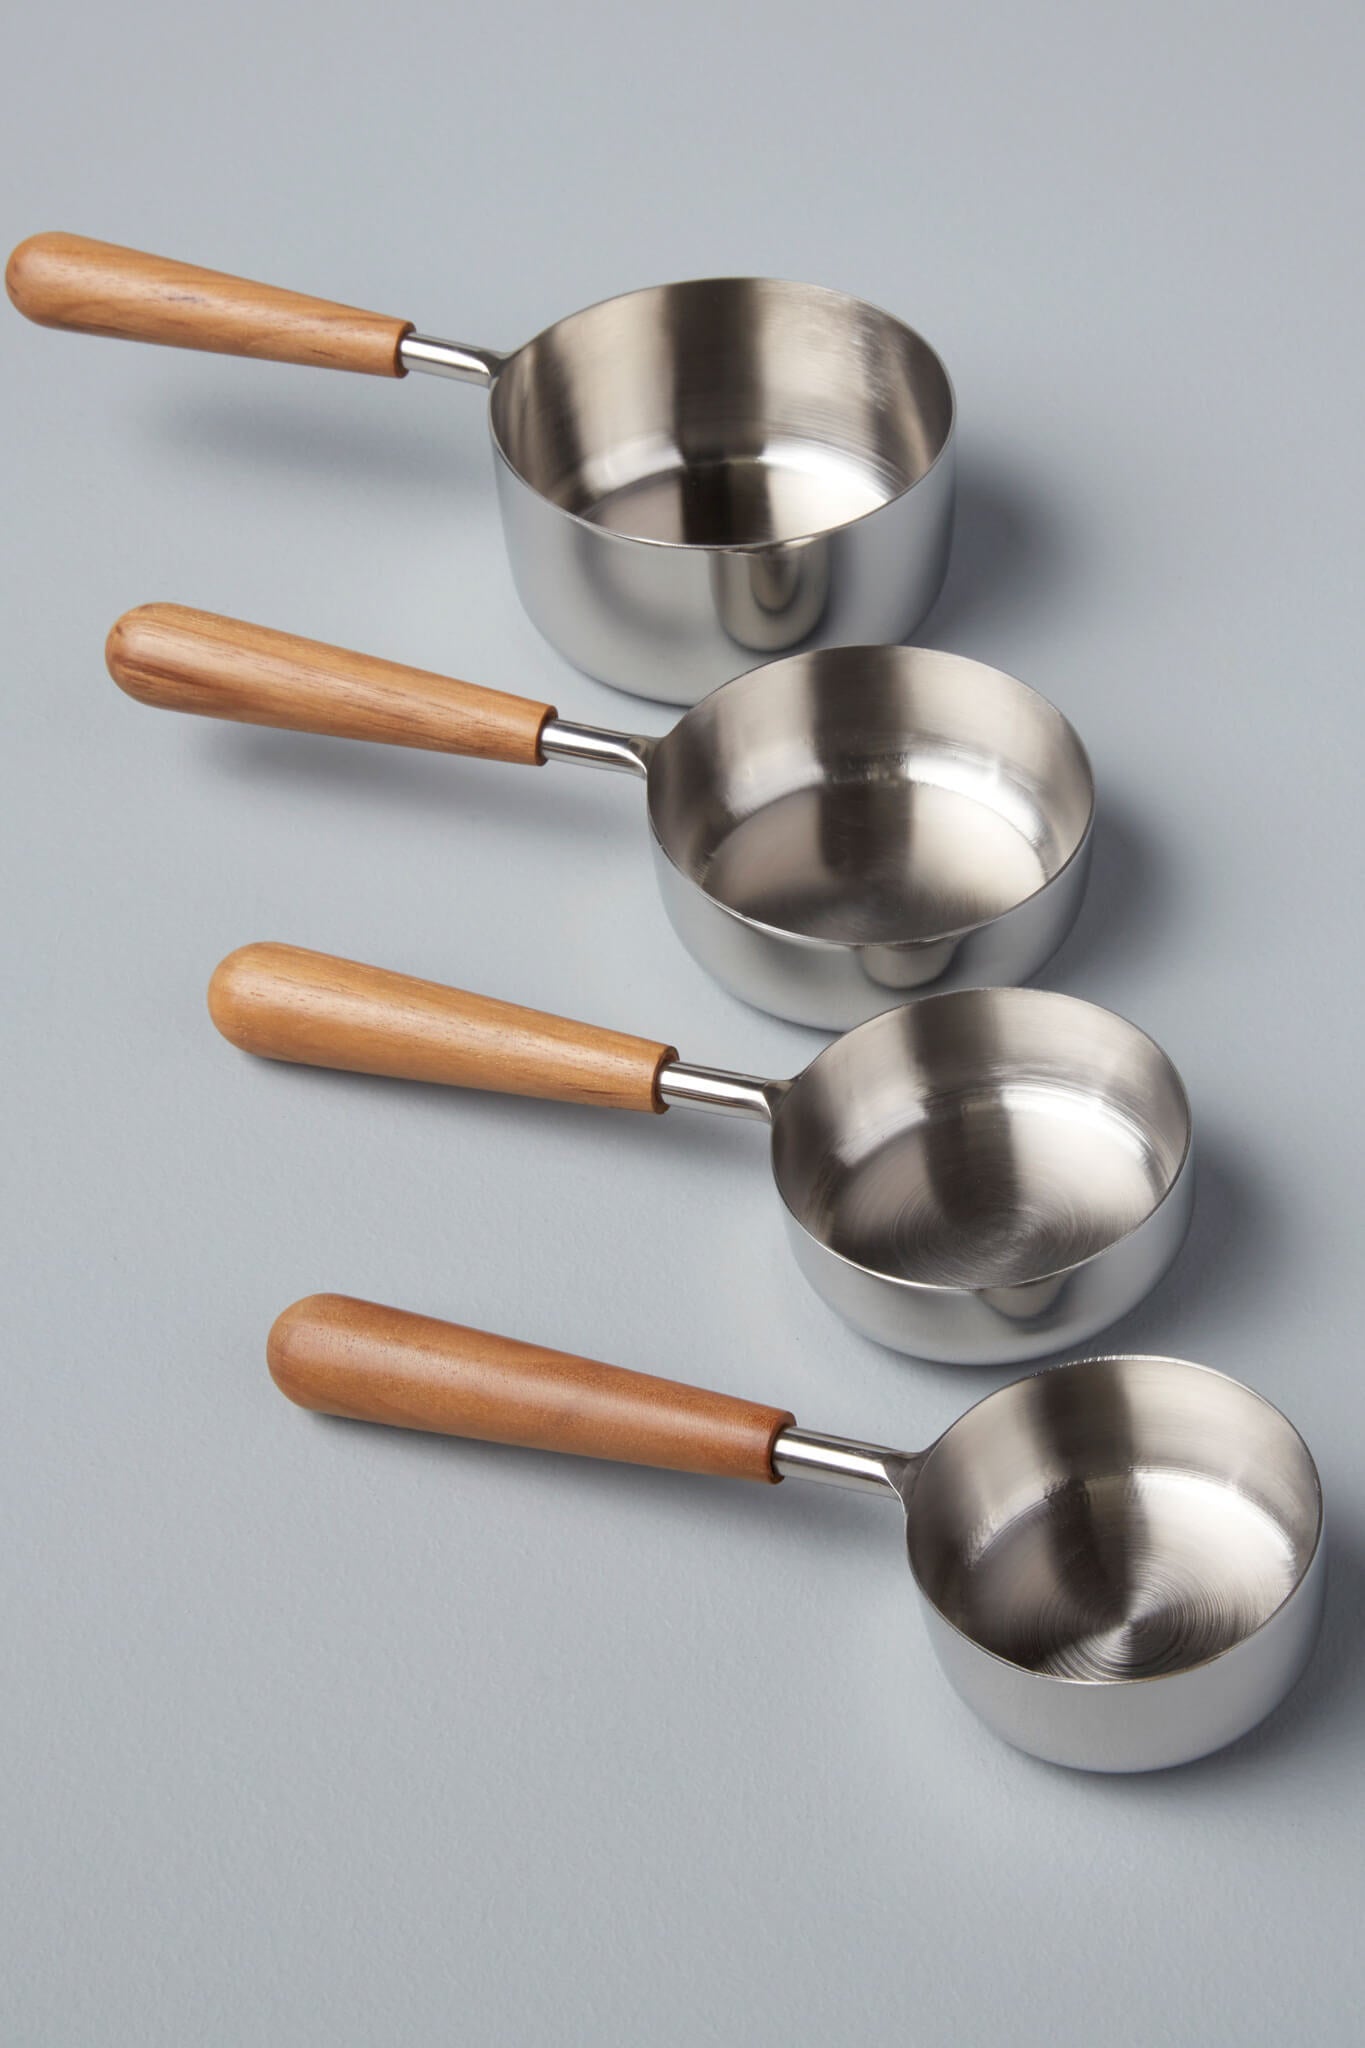 Measuring Spoon Set Wooden Handle Stainless Steel Measuring Cups Spoon